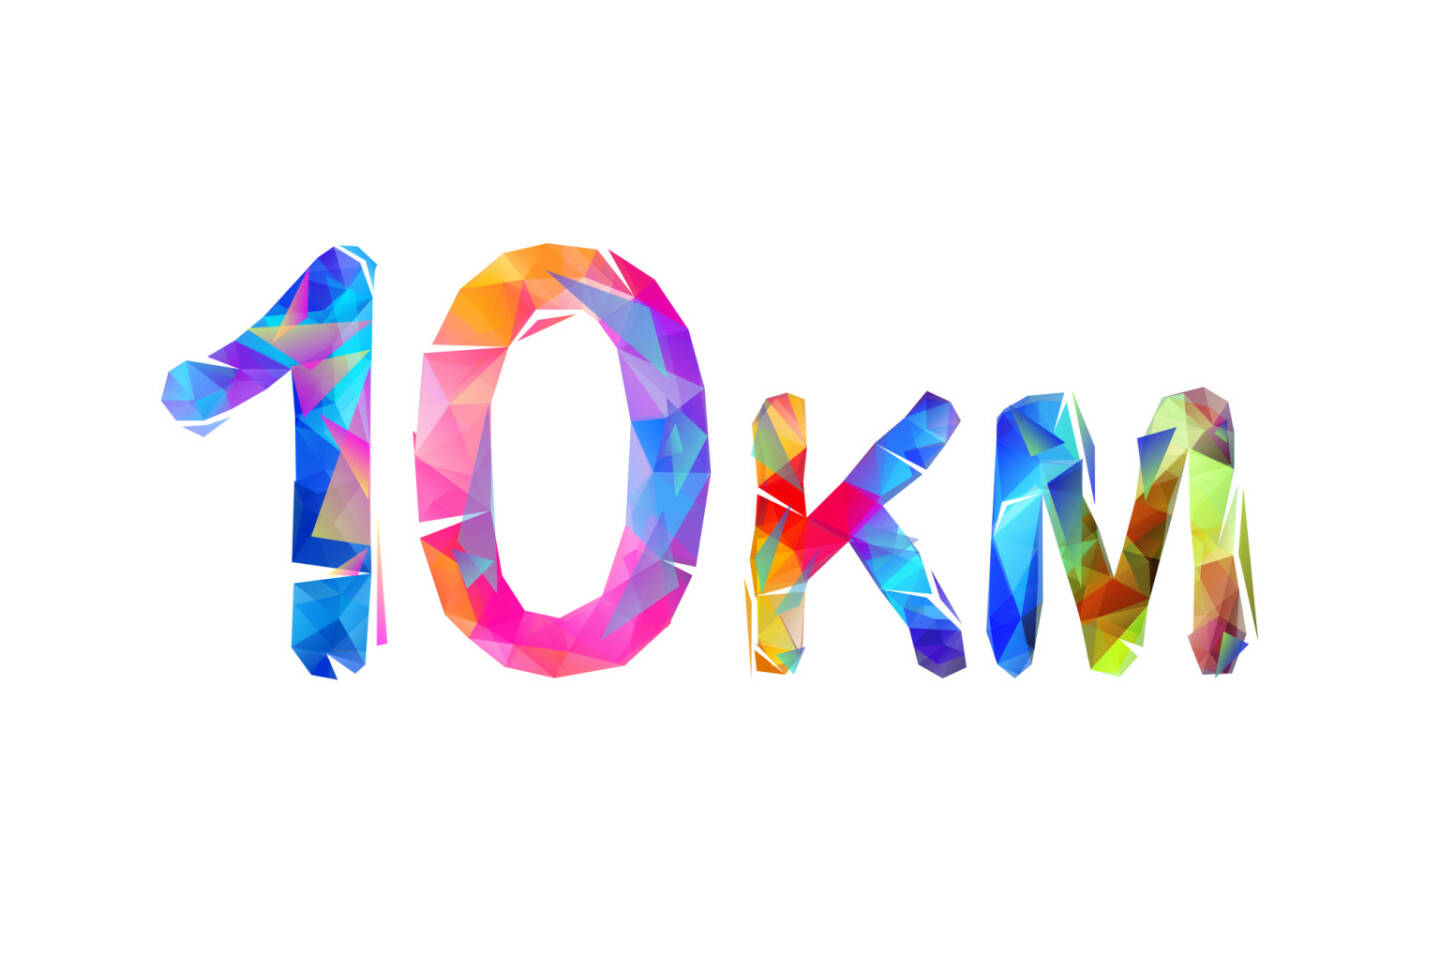 10 km, 10km, Zehn Kilometer - https://de.depositphotos.com/211118184/stock-illustration-medium-running-distance-sign-triangle.html